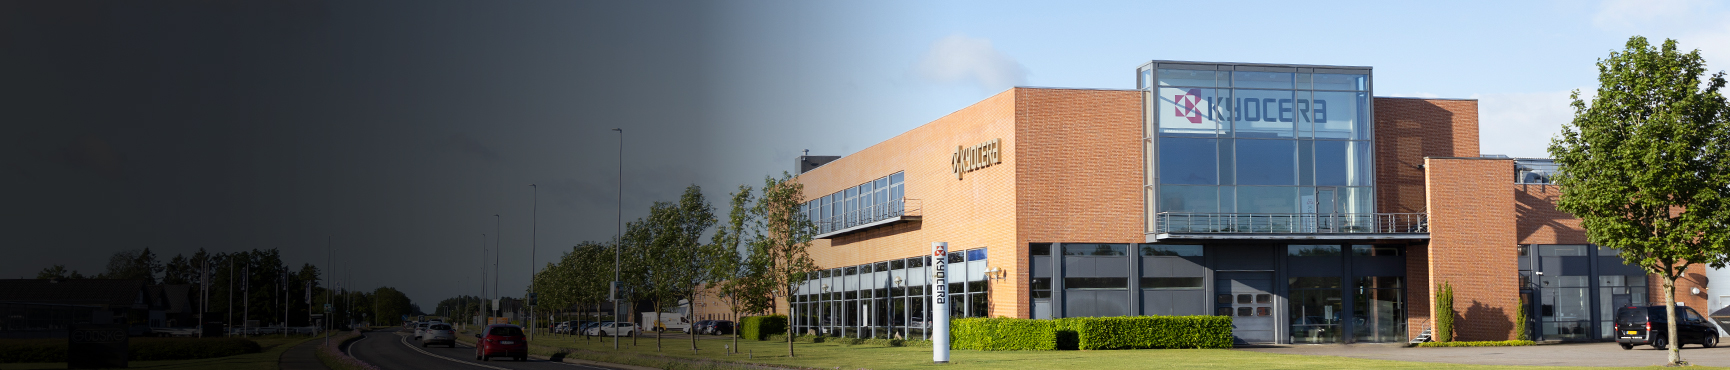 Kyocera Unimercos koncernhuvudkontor i Sunds i Danmark.